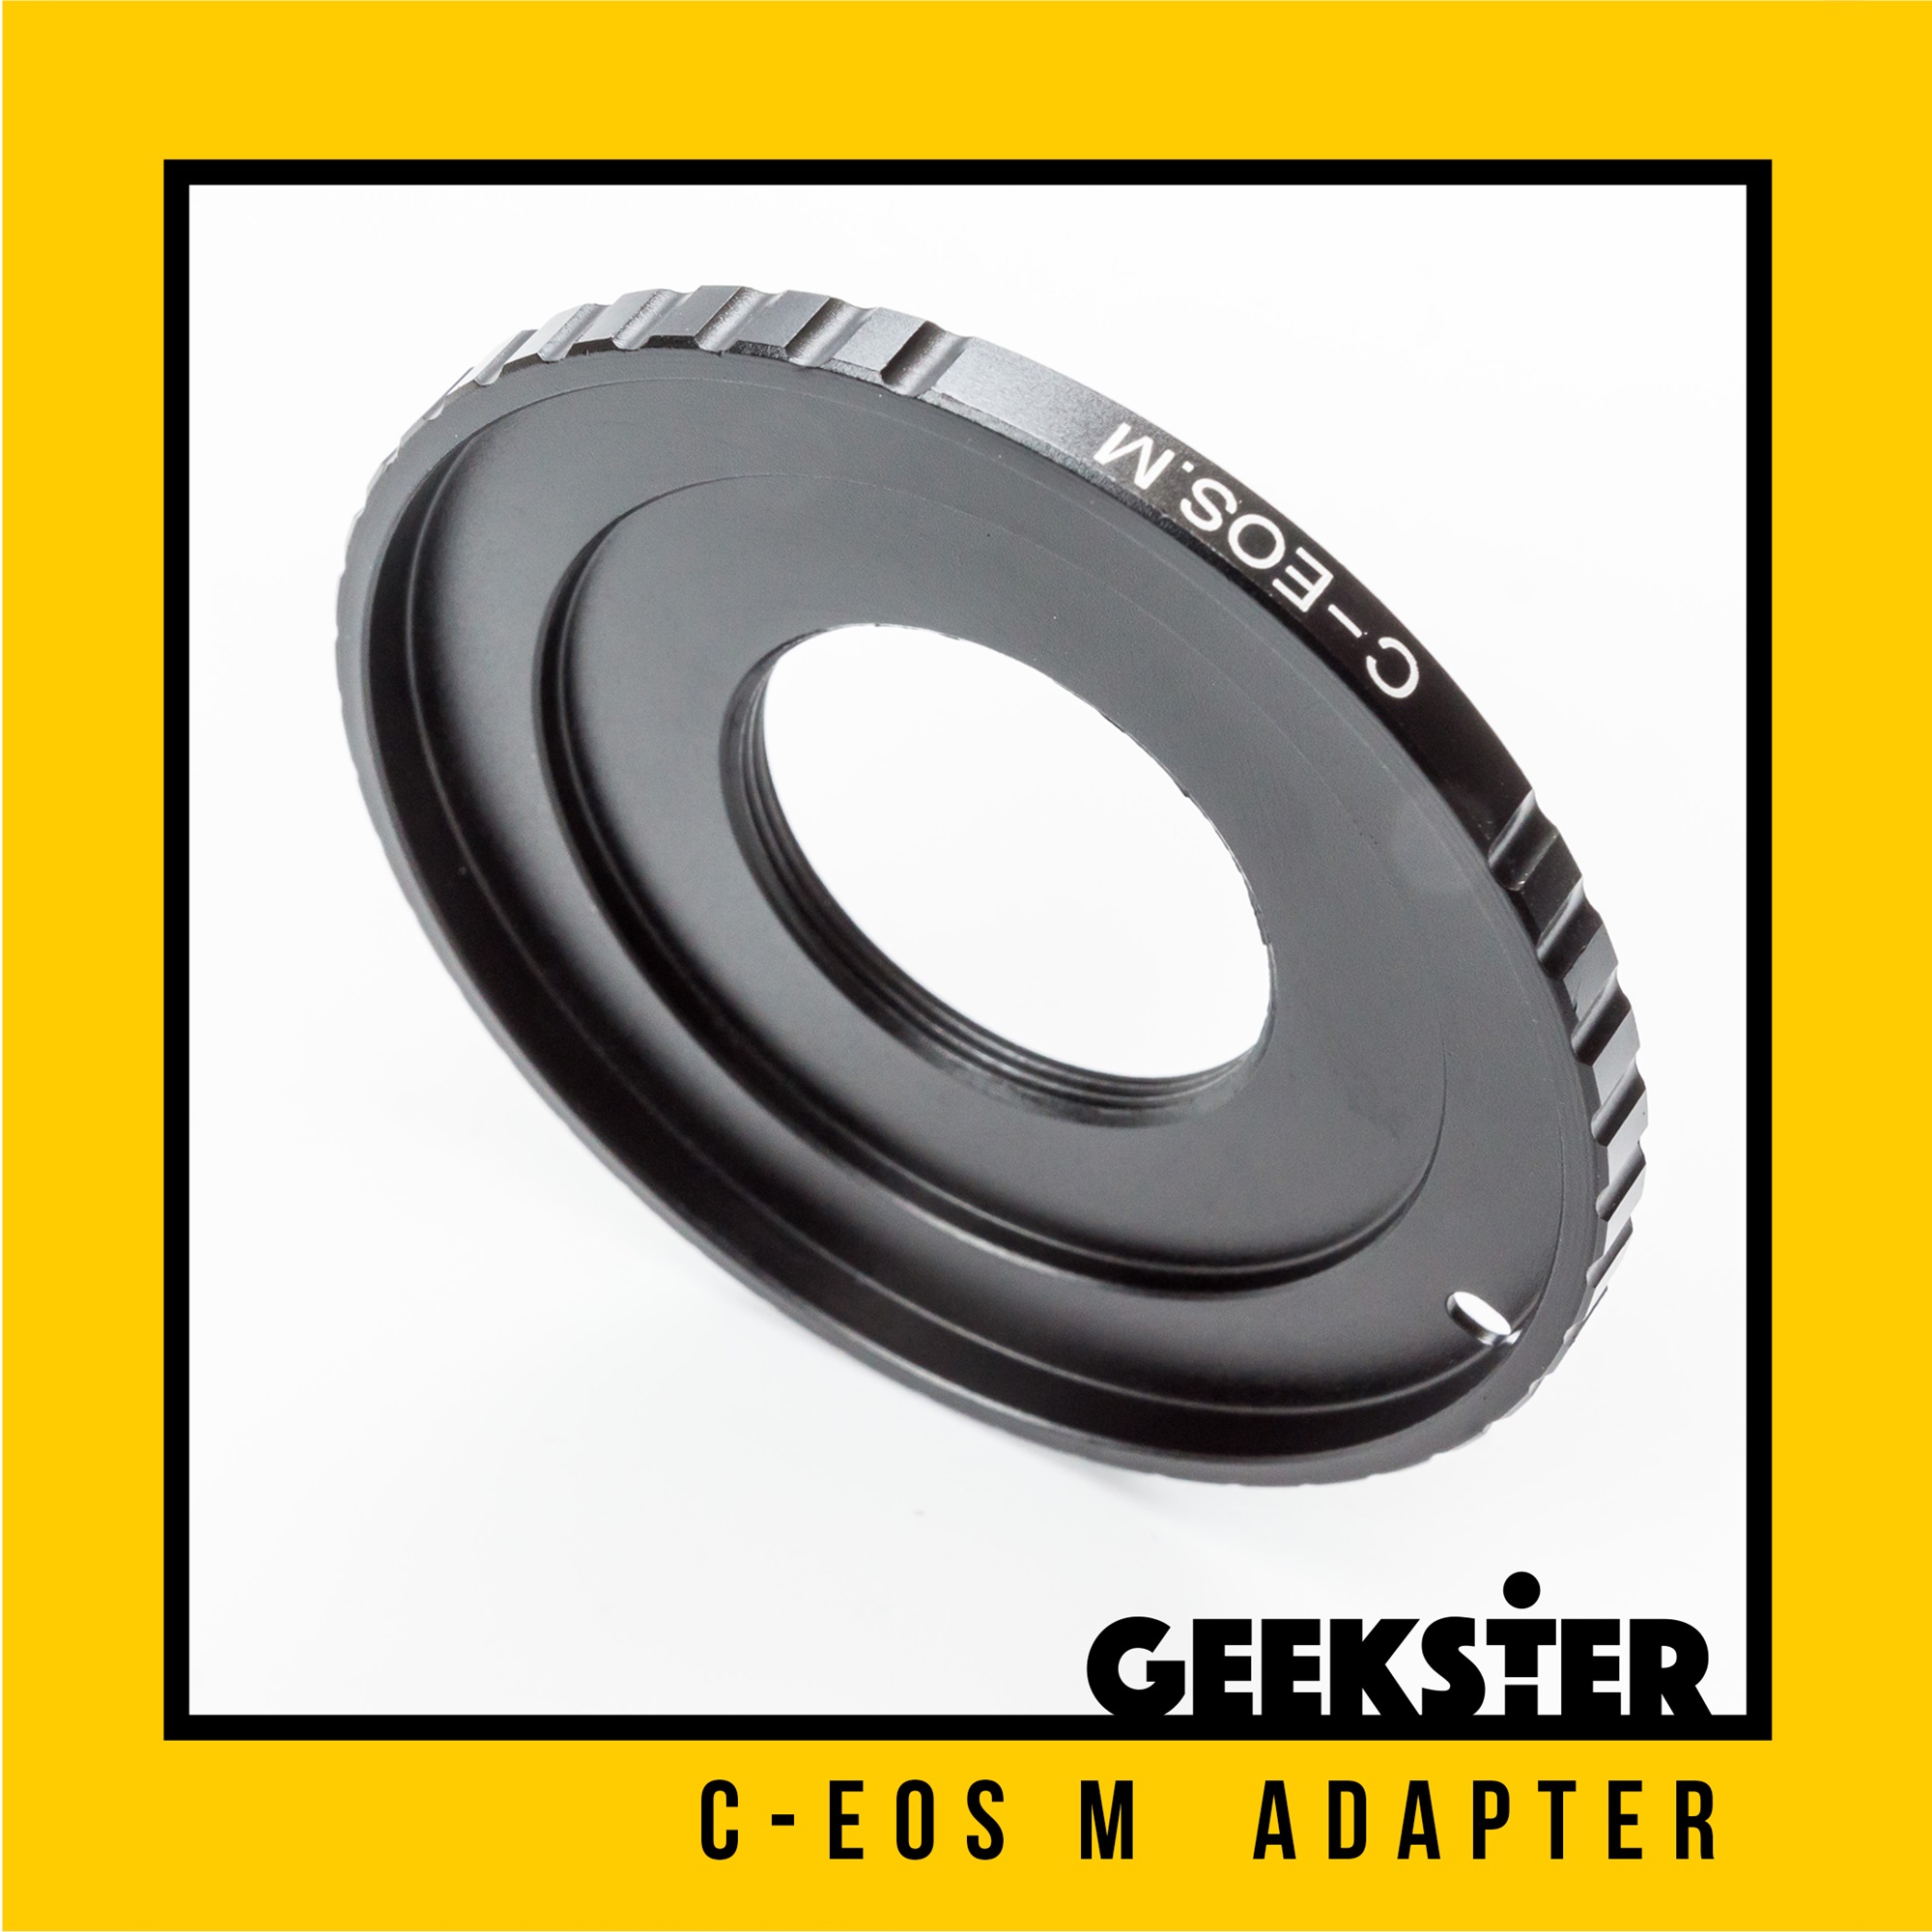 Adapter C mount ใช้แปลงเลนส์มือหมุน Fujian / Wesley / C mount สำหรับ Mirrorless ( FUJI / OLYMPUS / SONY / PANASONIC / CANON / Nikon1 ) ( C-FX / C-NEX / C-m43 / C-EOS M / C-N1 Lens Adapter ) อแดปเตอร์ Lens Mount Adapter C-Mount ( Geekster )